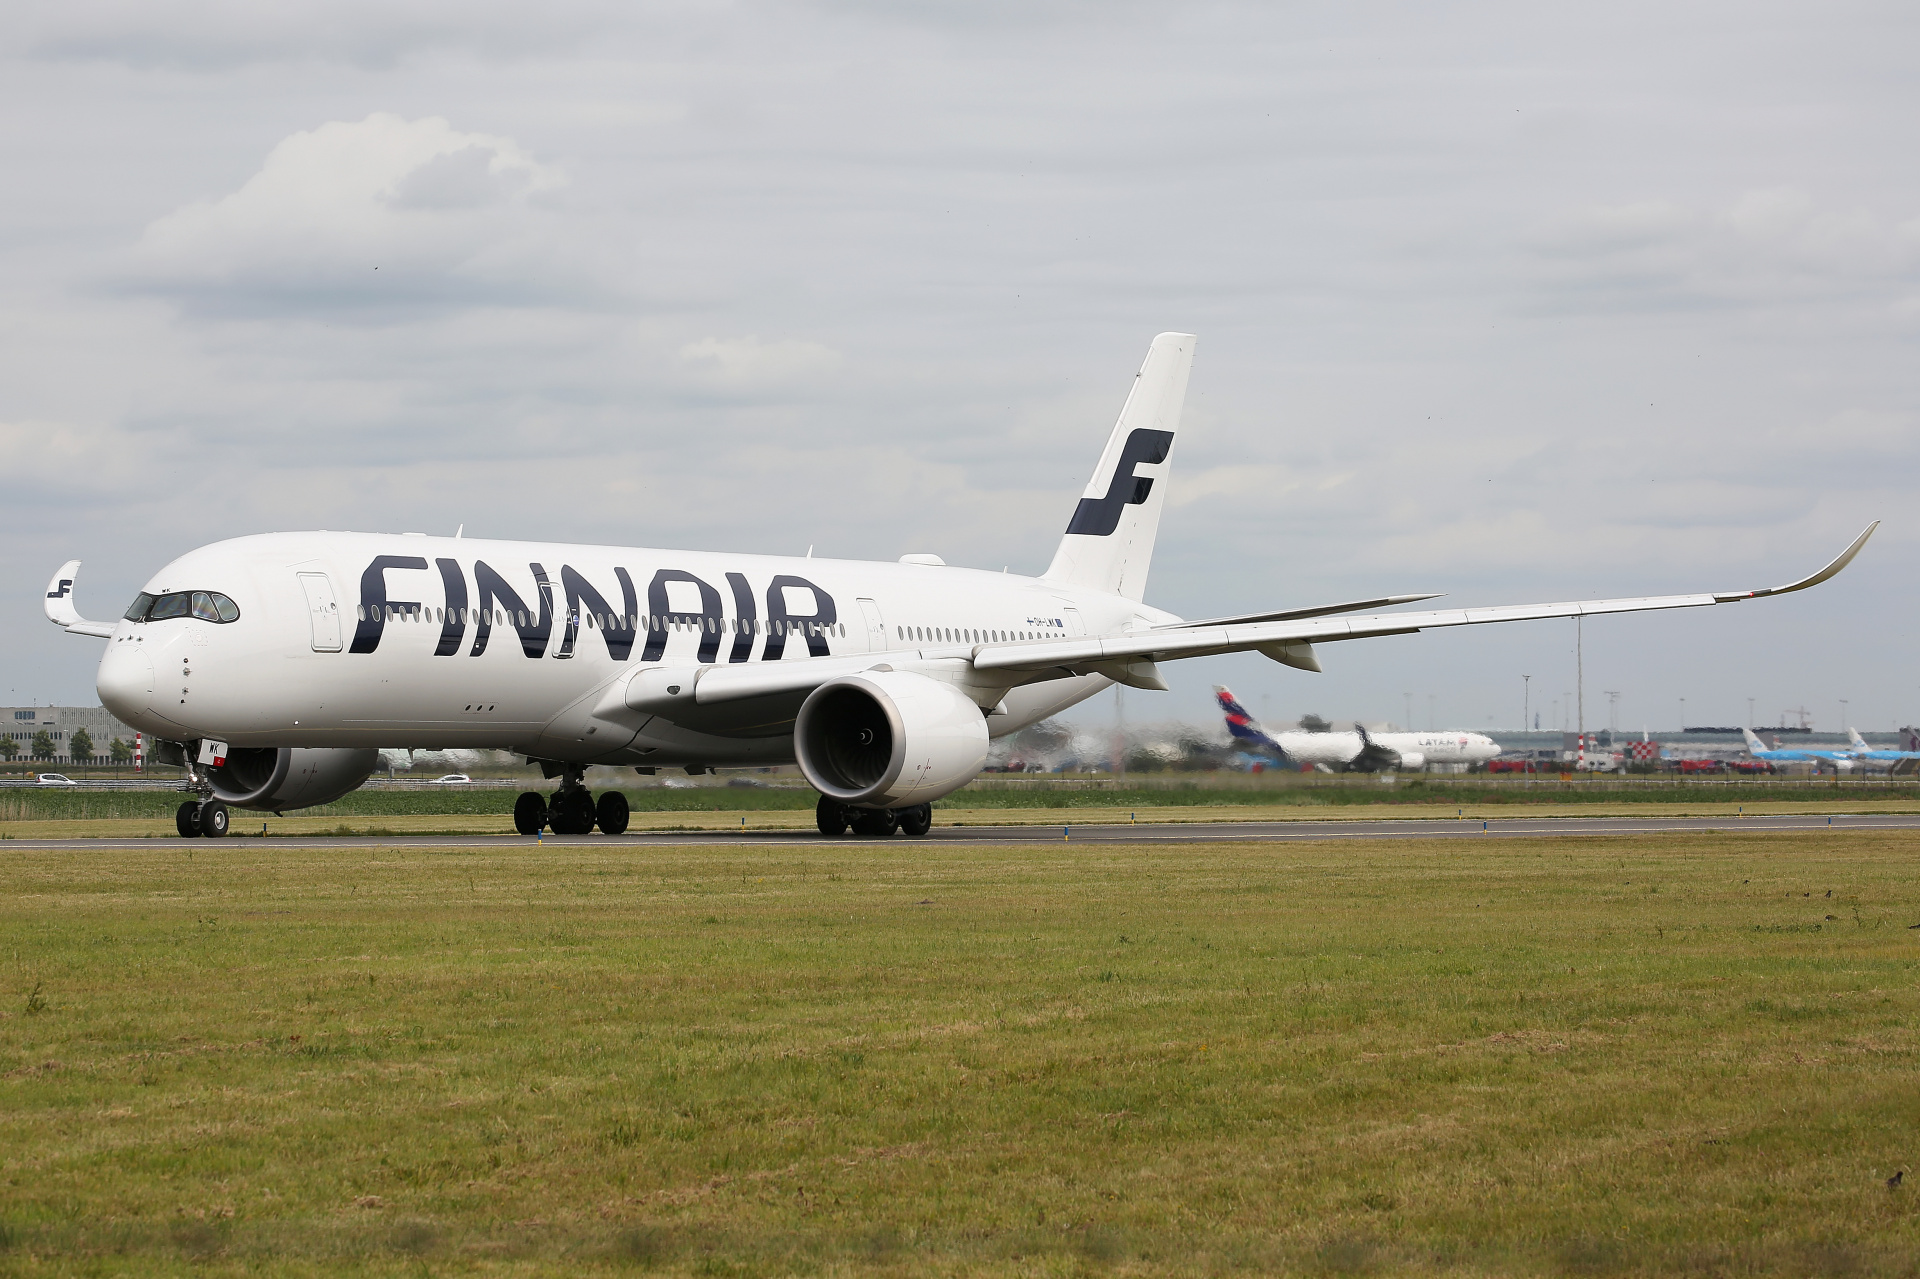 OH-LWK (Aircraft » Schiphol Spotting » Airbus A350-900 » Finnair)